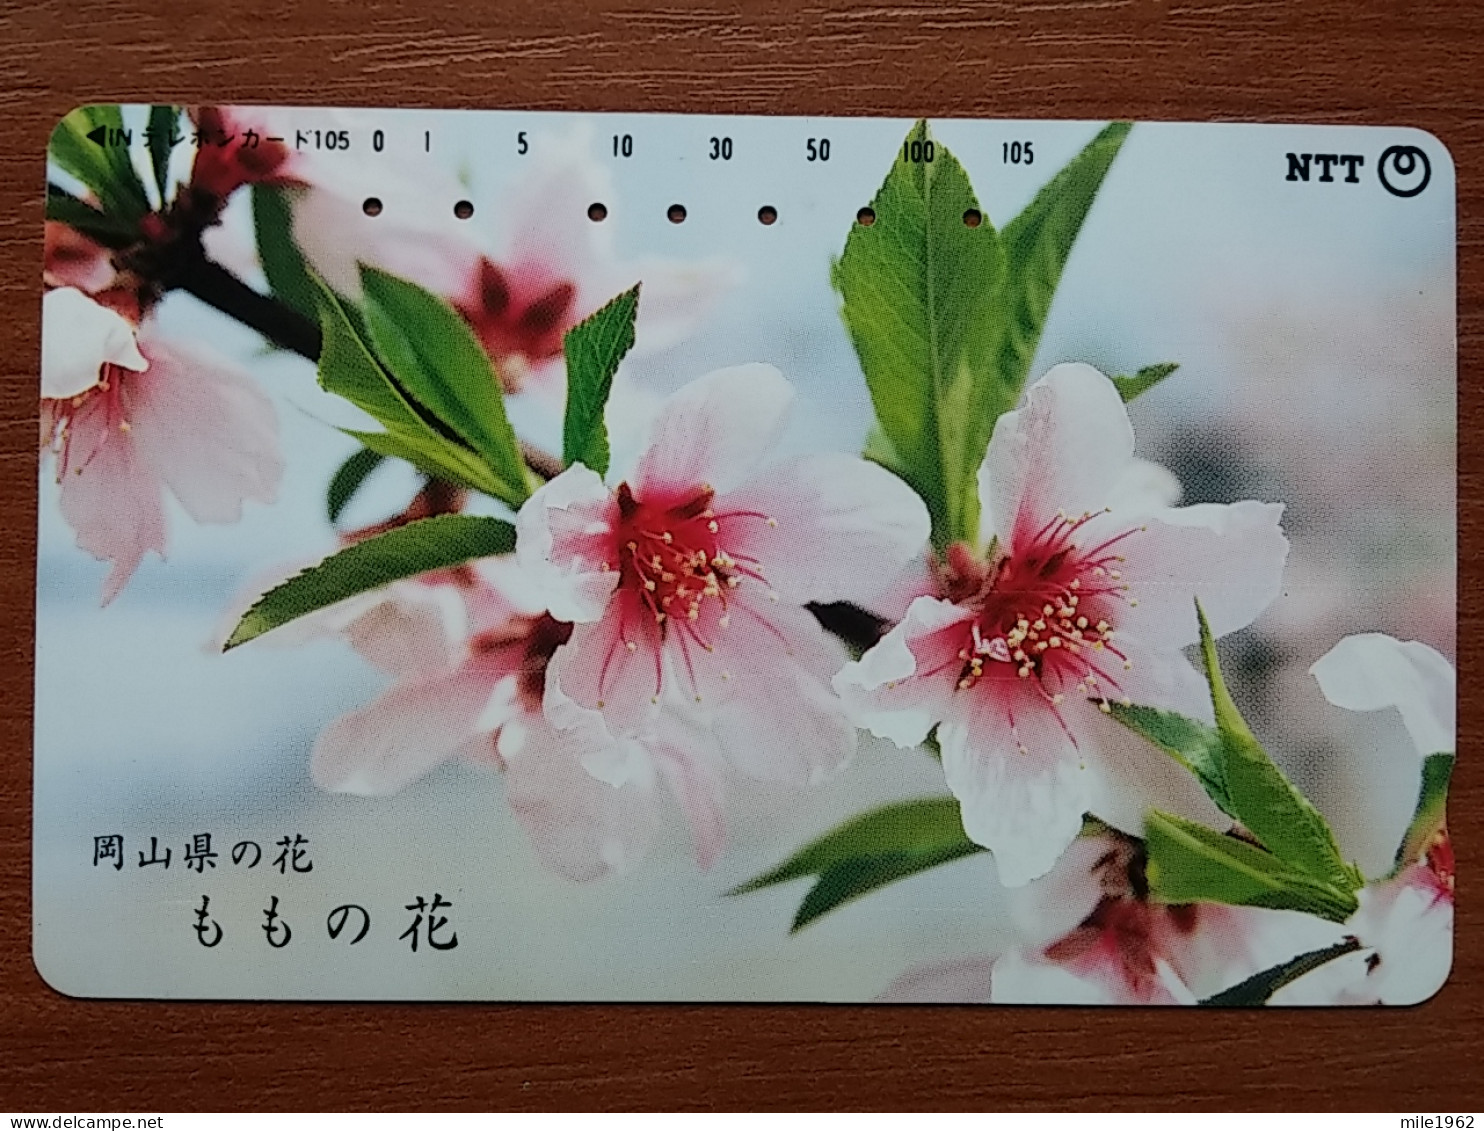 T-382 - JAPAN, Japon, Nipon, TELECARD, PHONECARD, Flower, Fleur, NTT 351-219 - Fleurs